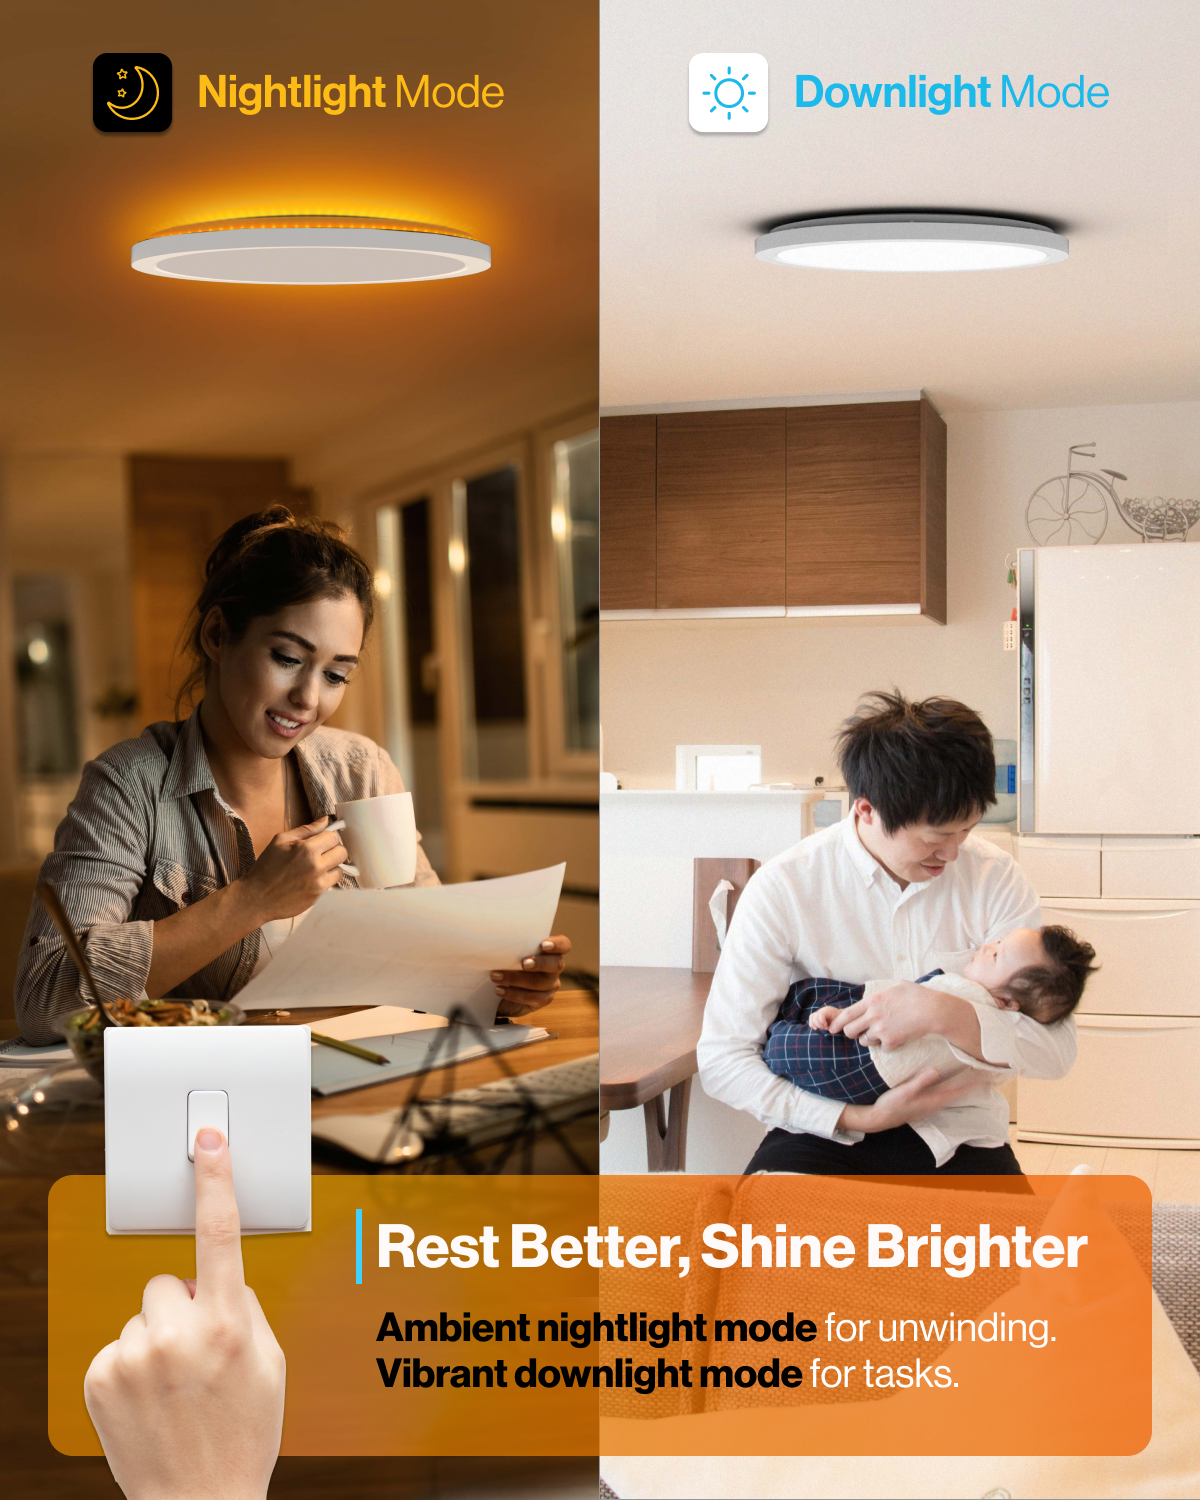 Sunco Lighting 13" White Selectable Ceiling Light Dual Lighting Nightlight Mode for Relaxing Downlight Mode for Productivity